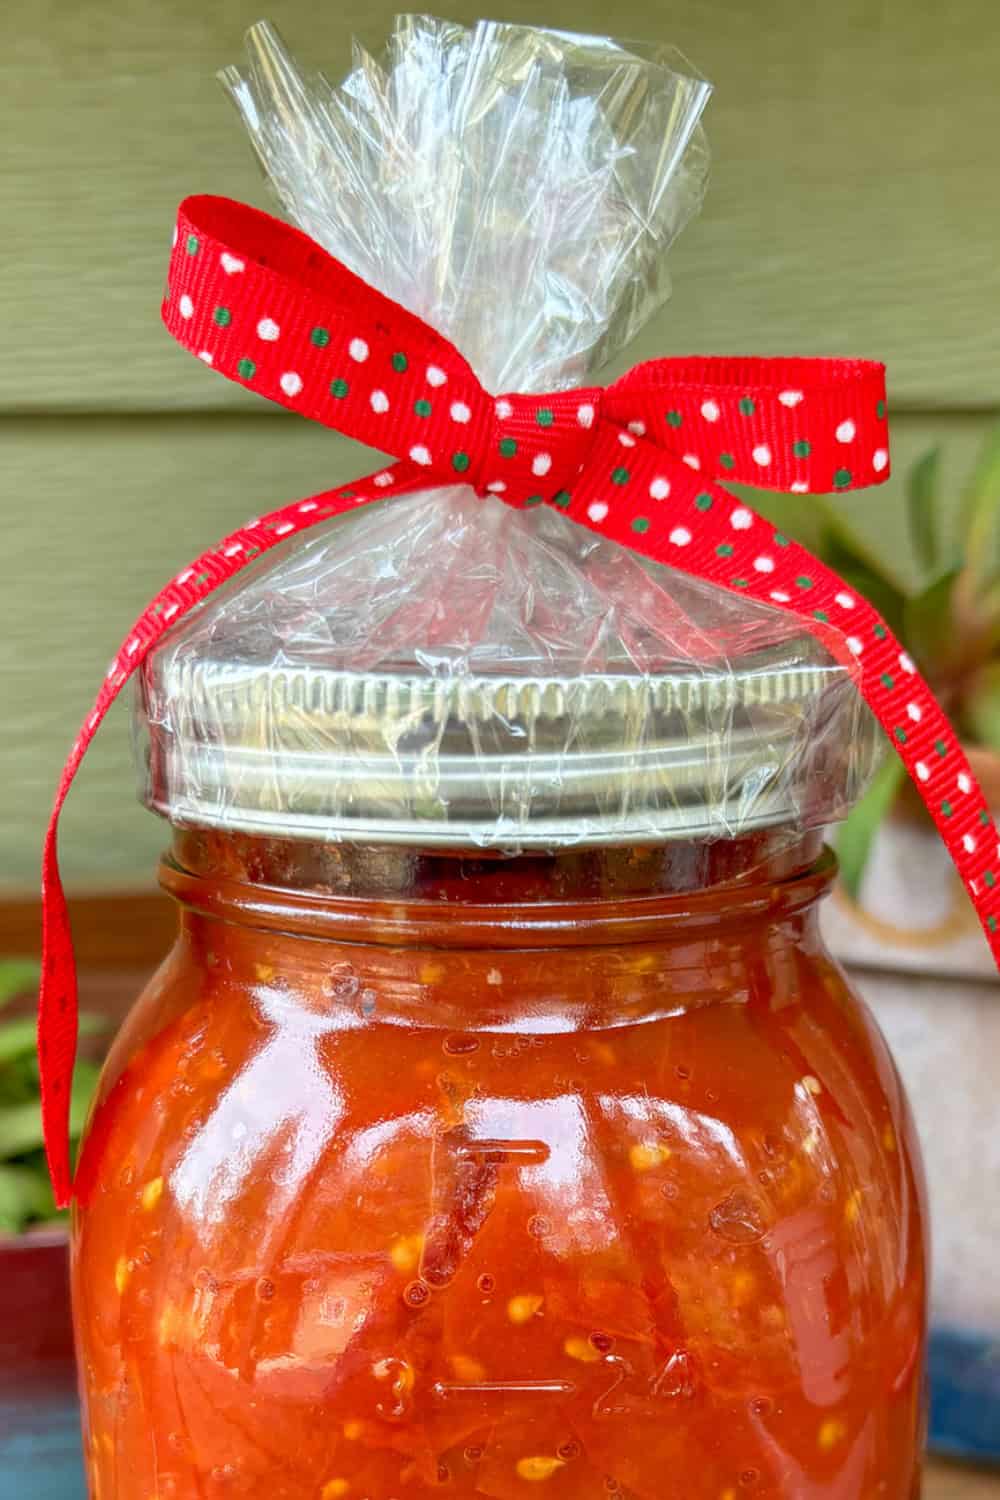 canned spaghetti sauce ready for an Italian food gift basket